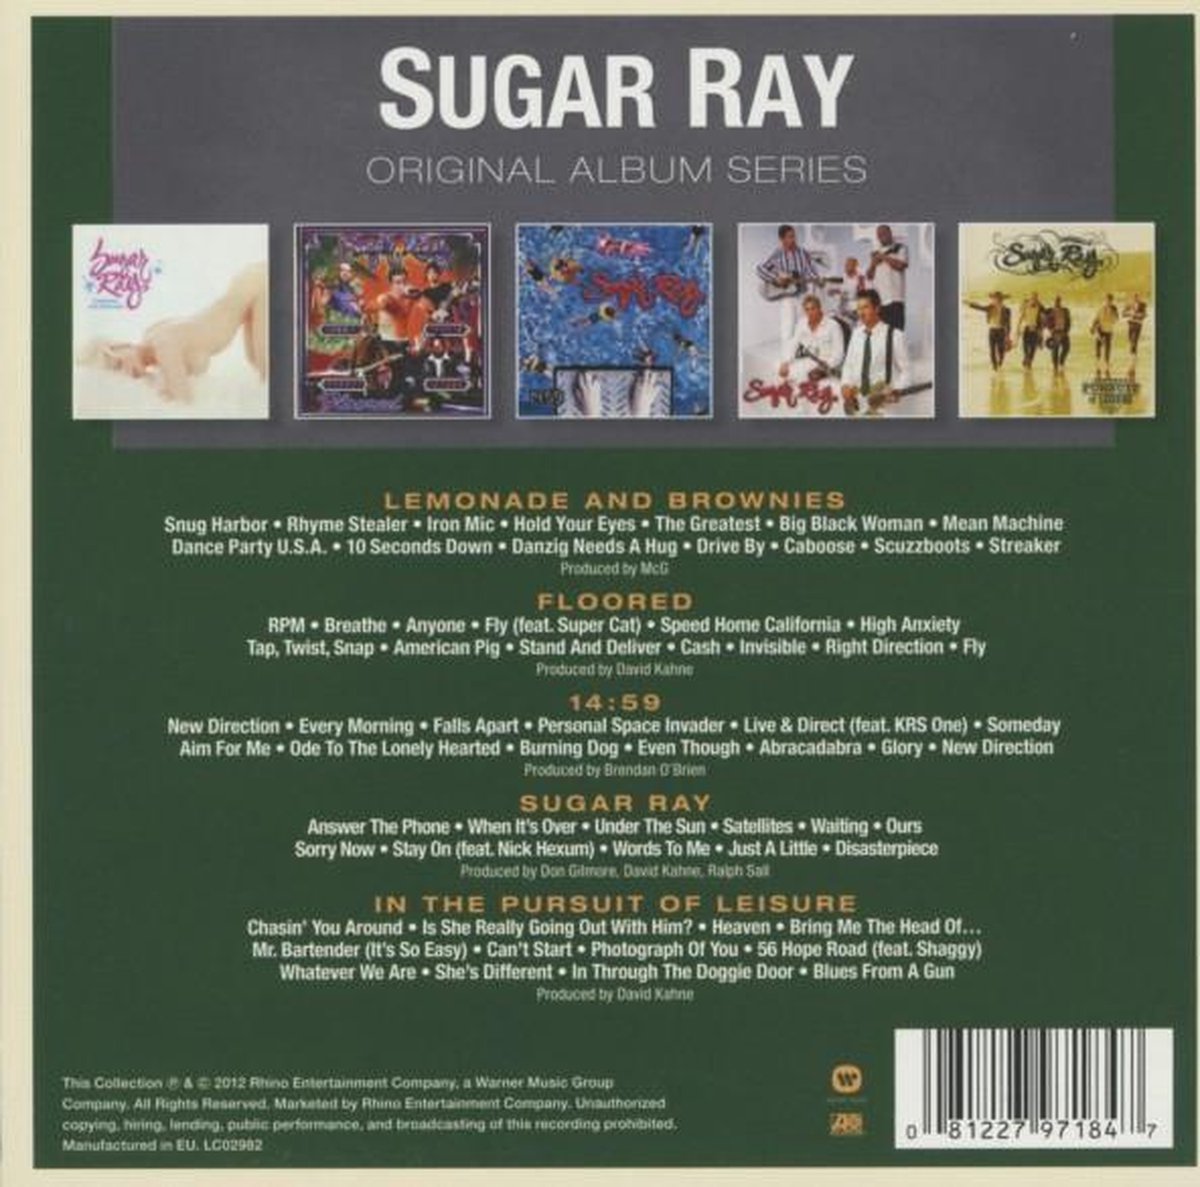 Every morning - sugar ray lyrics meaning